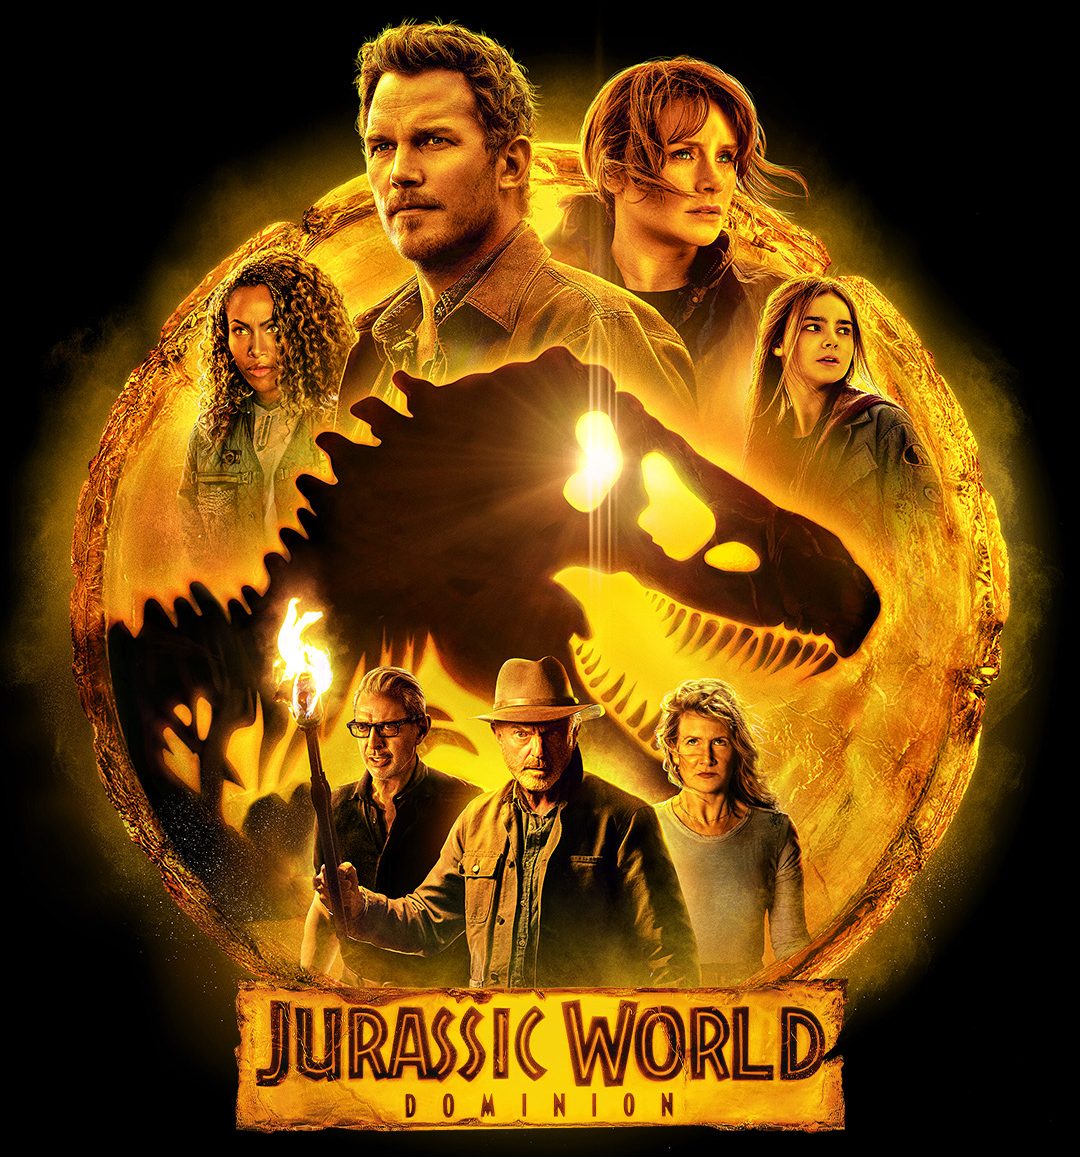 “Jurassic World Night” Tonight on NBC!